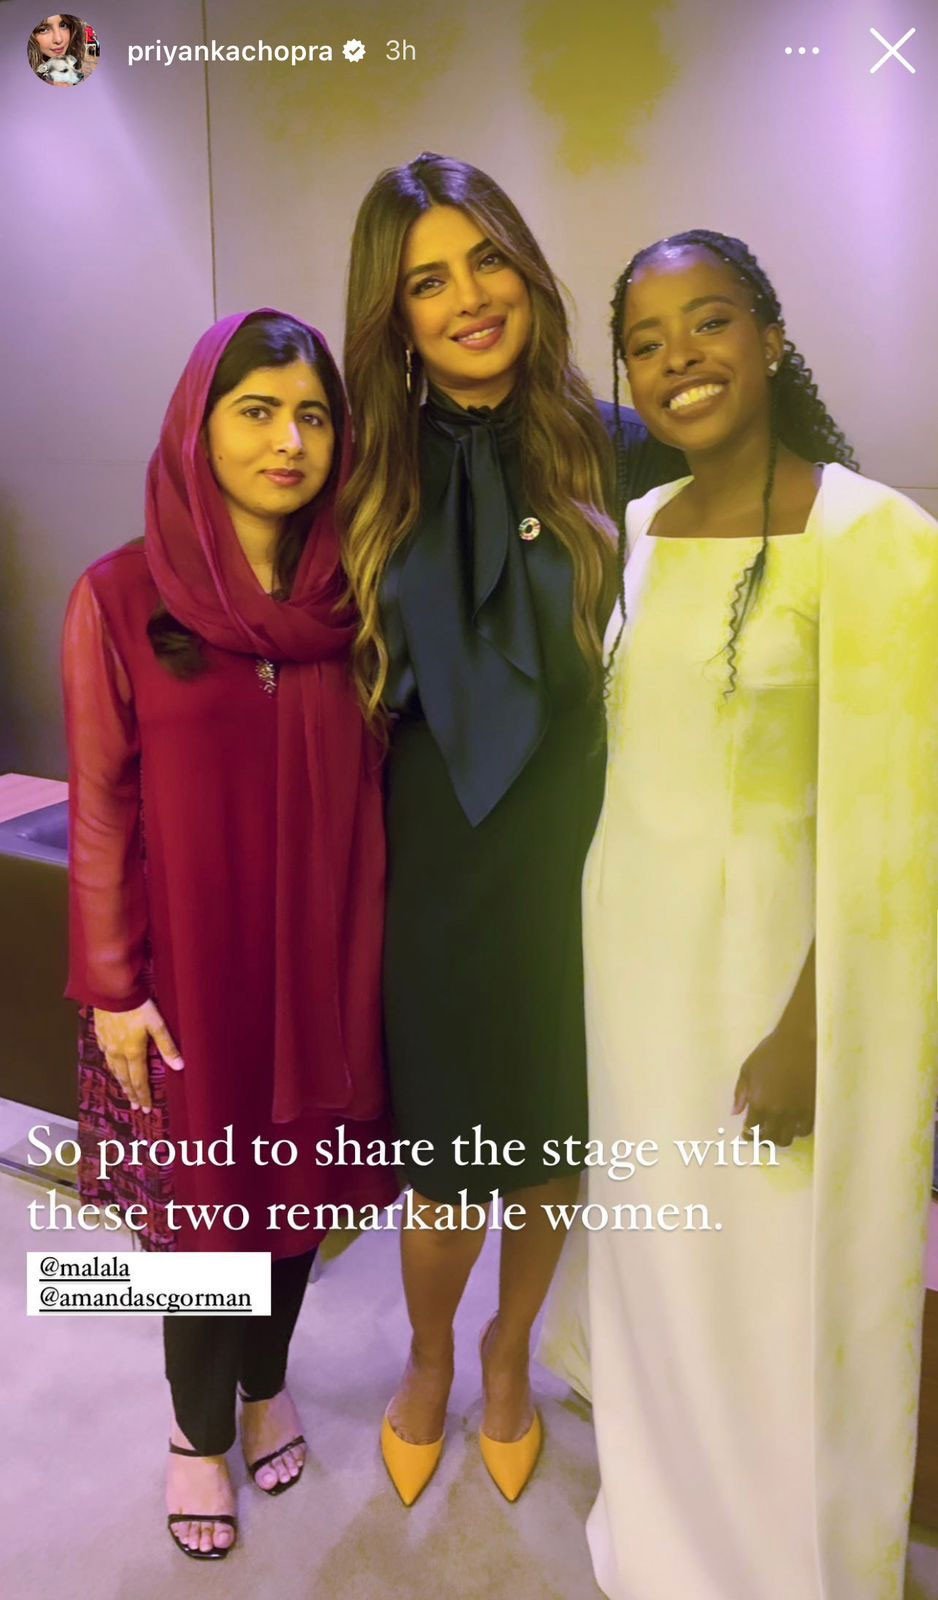 Priyanka Chopra shares stage with the remarkable Malala Yousafzai at the UNGA 